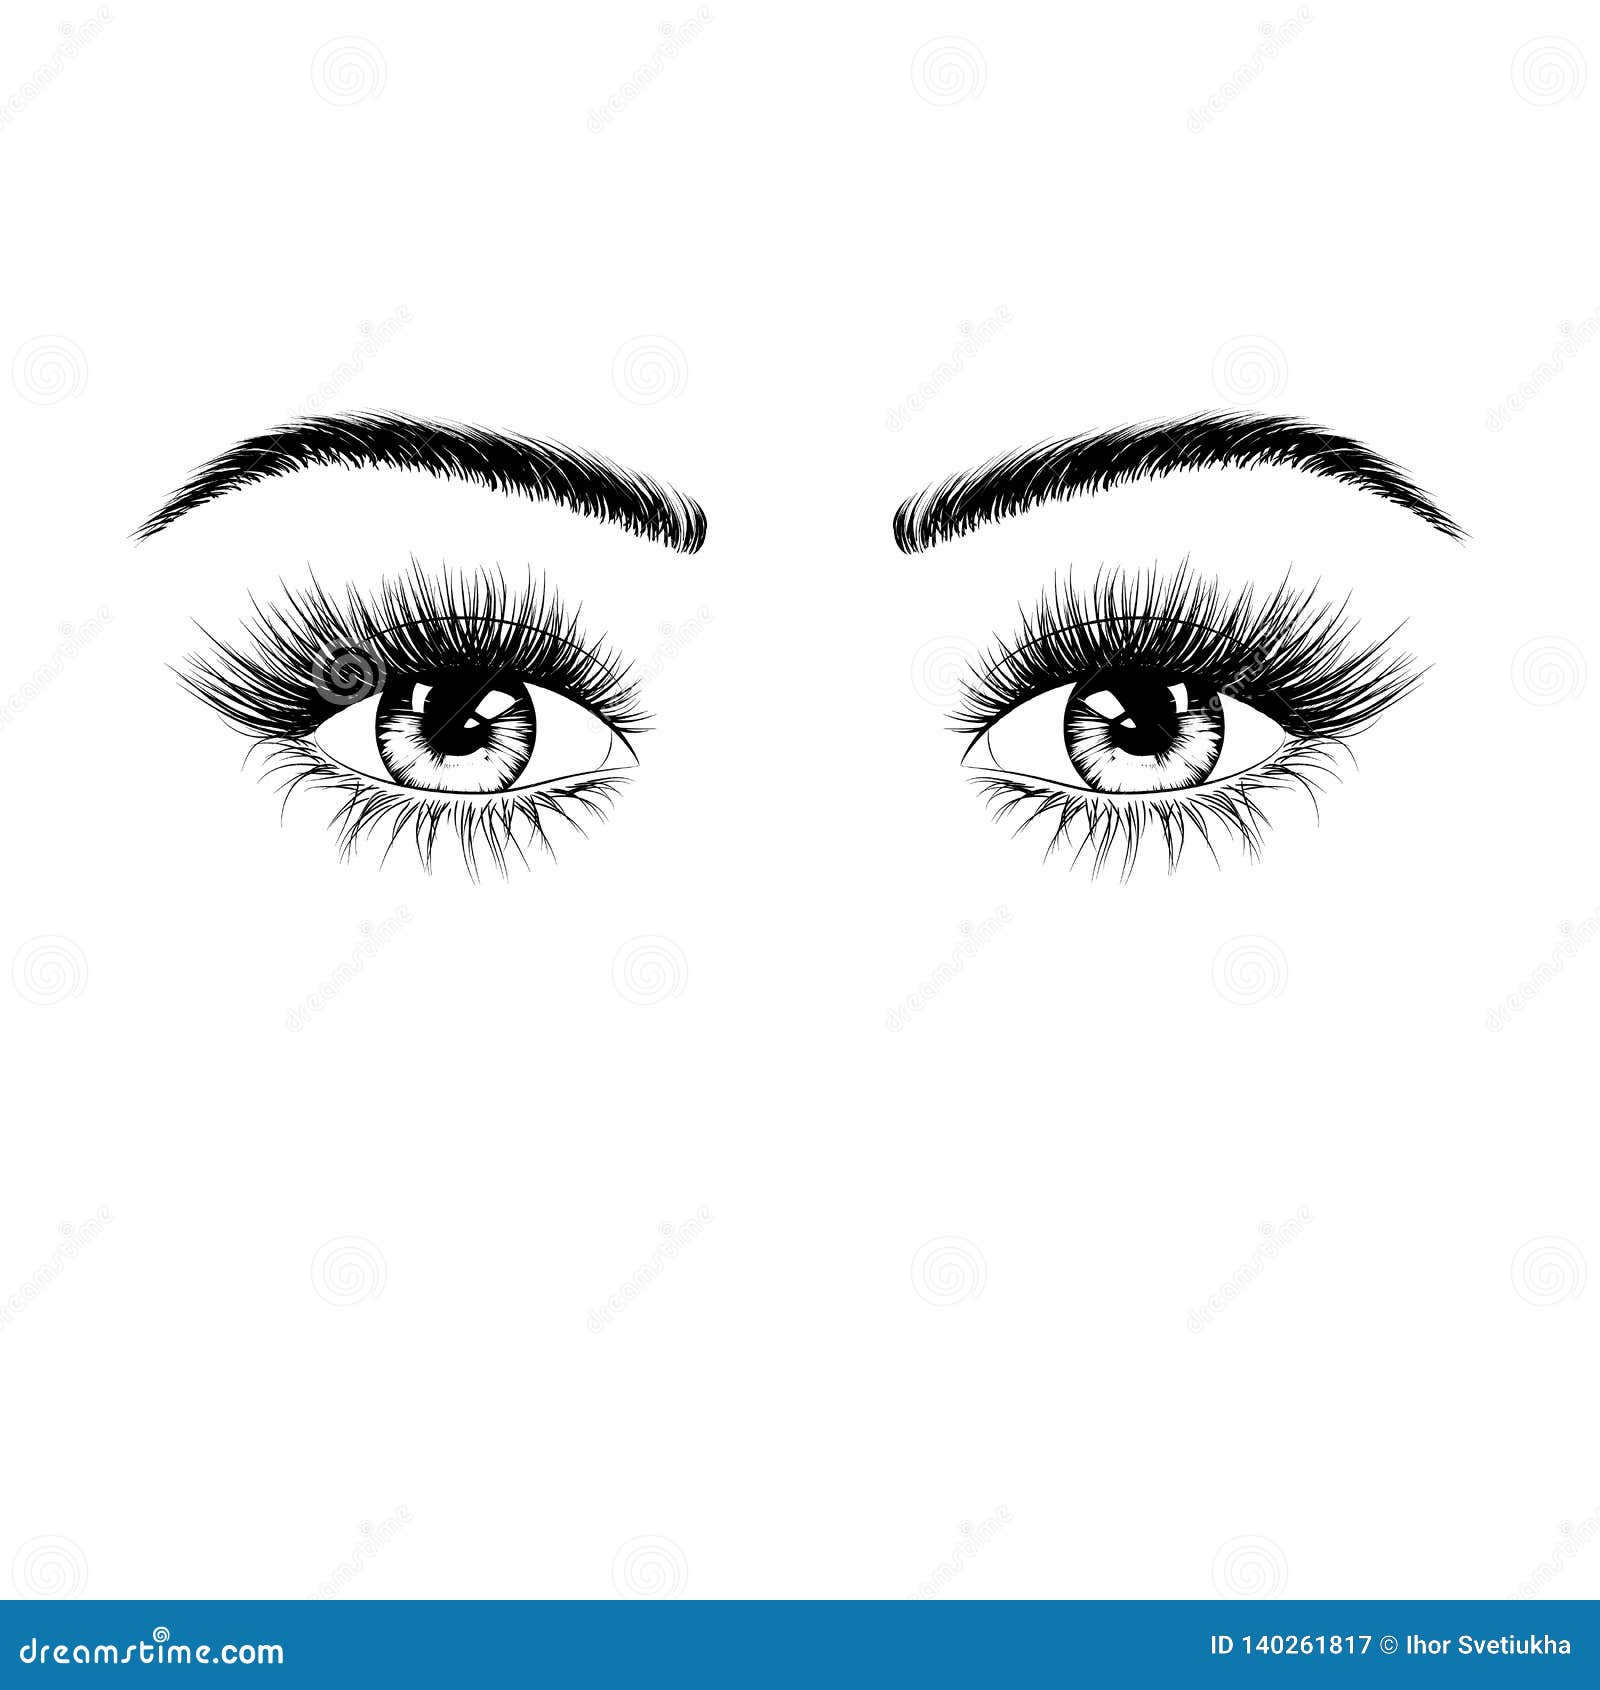 hand drawn female eyes silhouette. eyes with eyelashes and eyebrows.    on white background